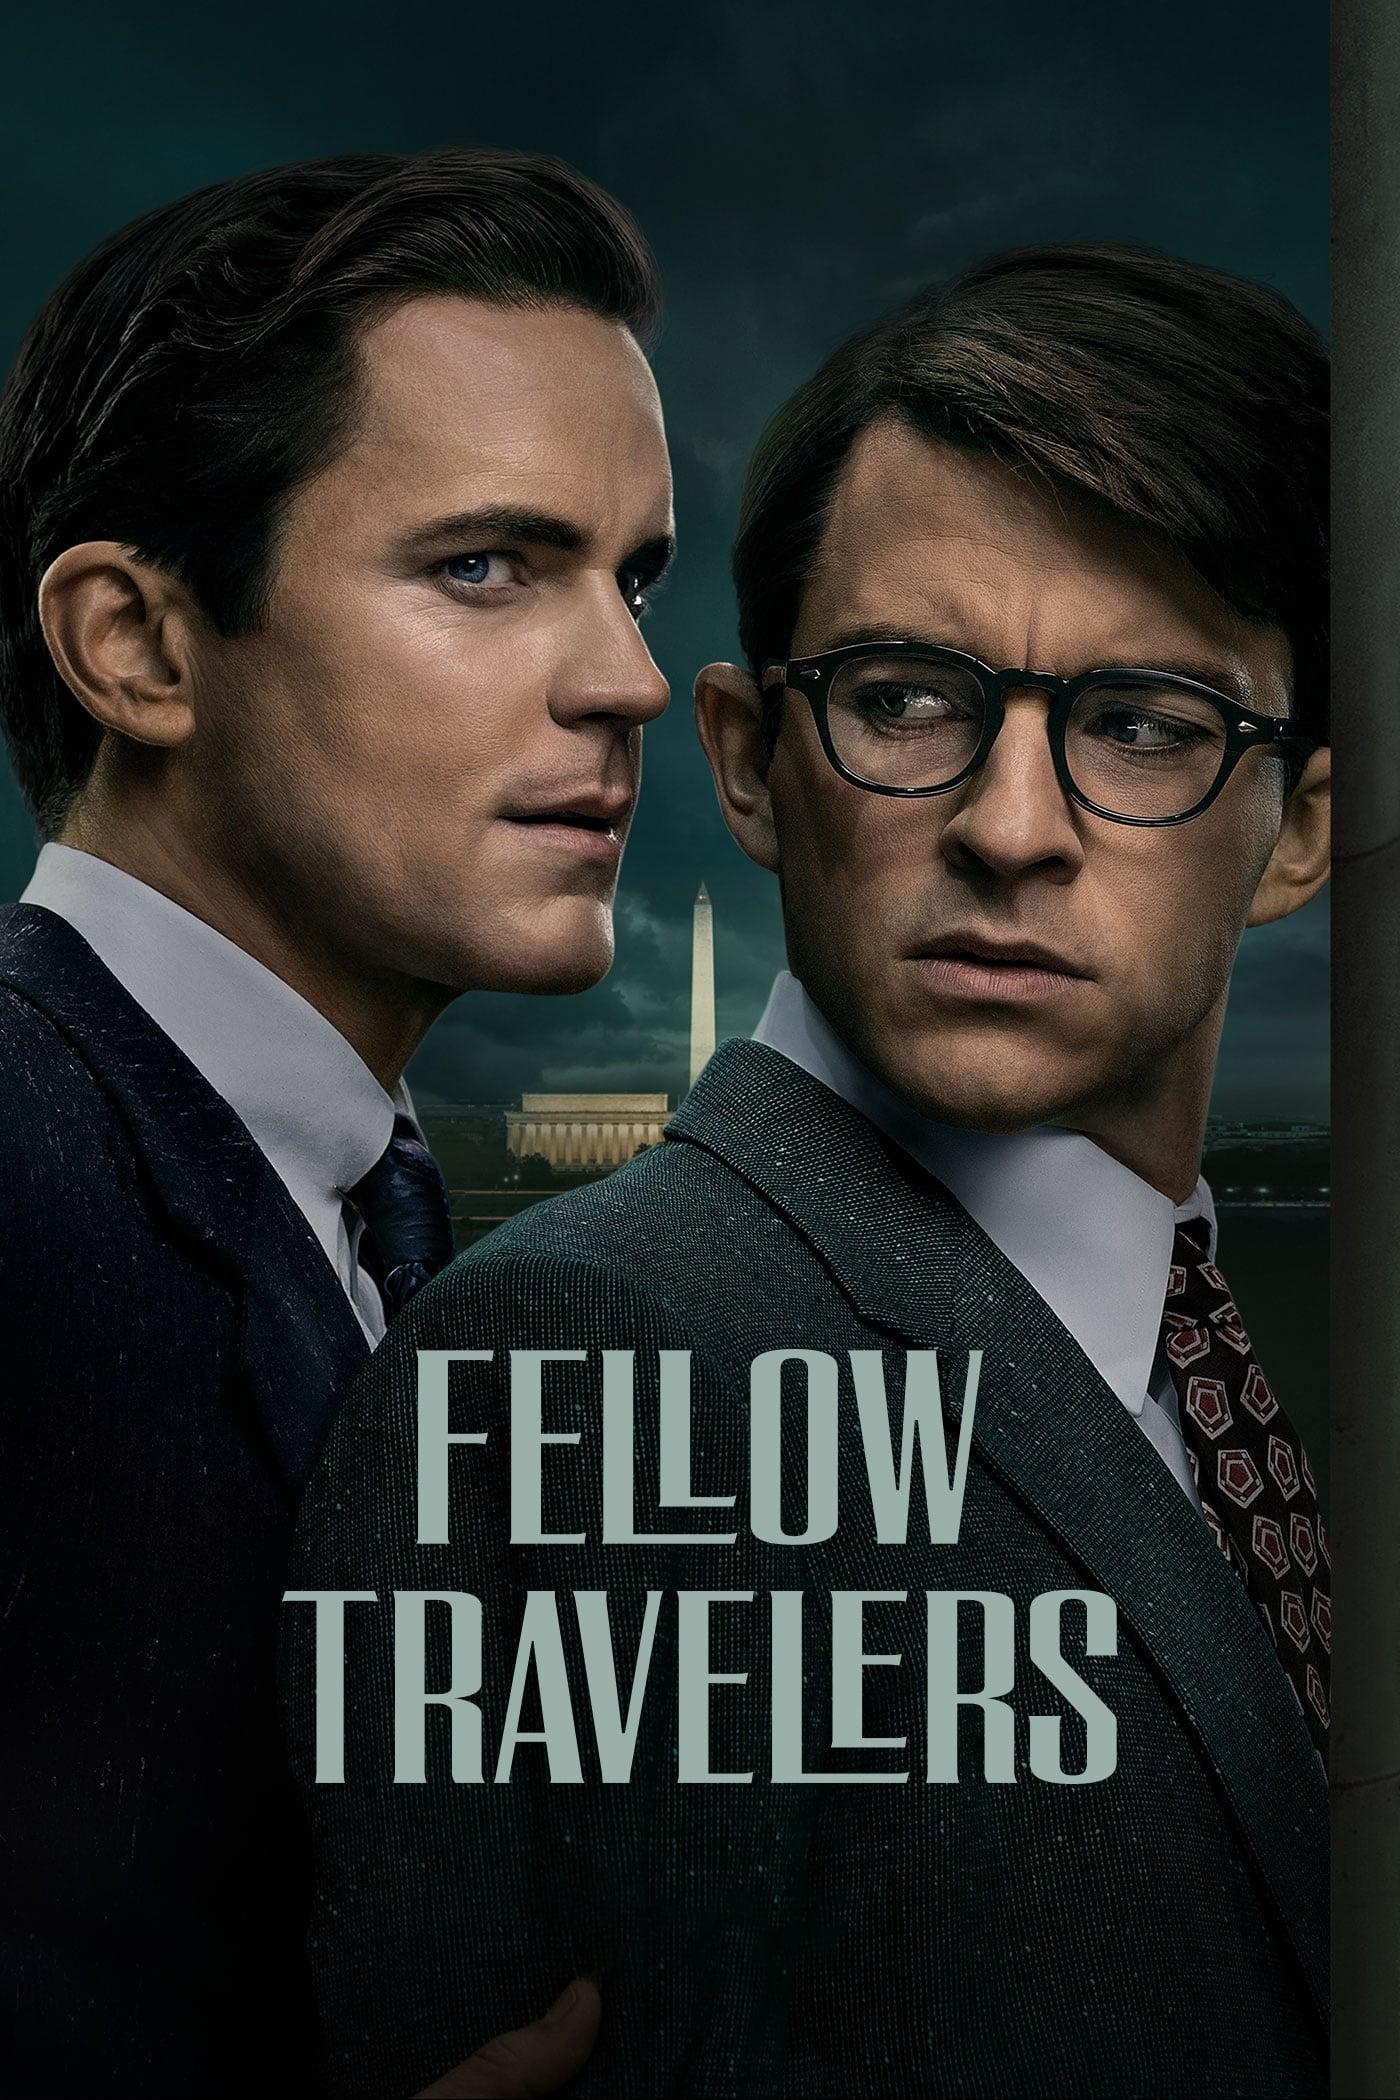 Fellow Travelers poster